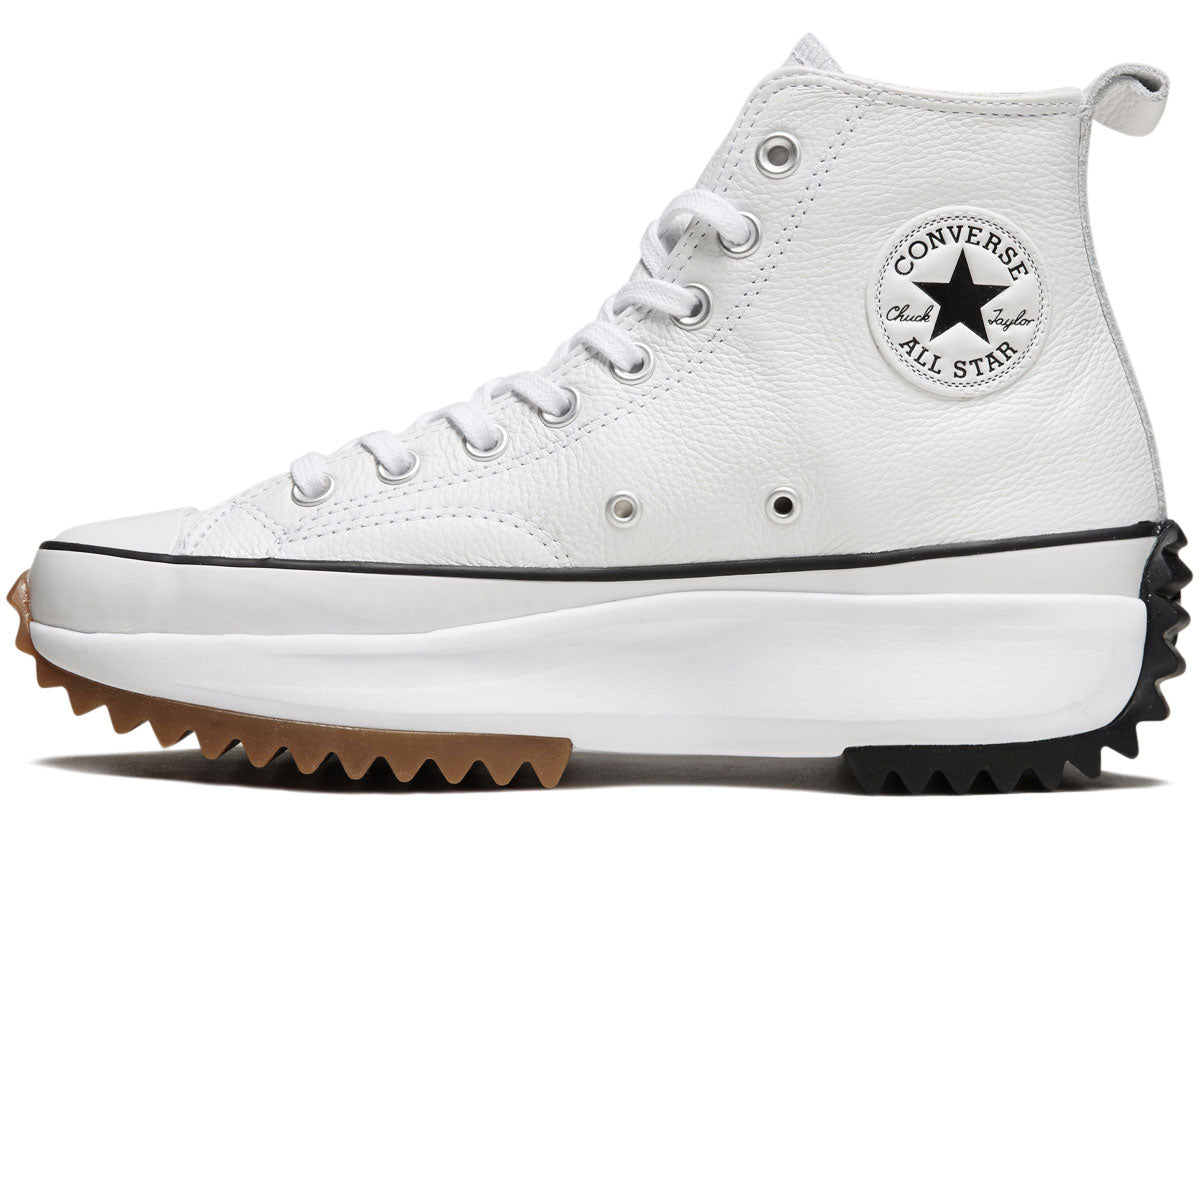 Converse Run Star Hike Hi Shoes - White/Black/Gum image 2